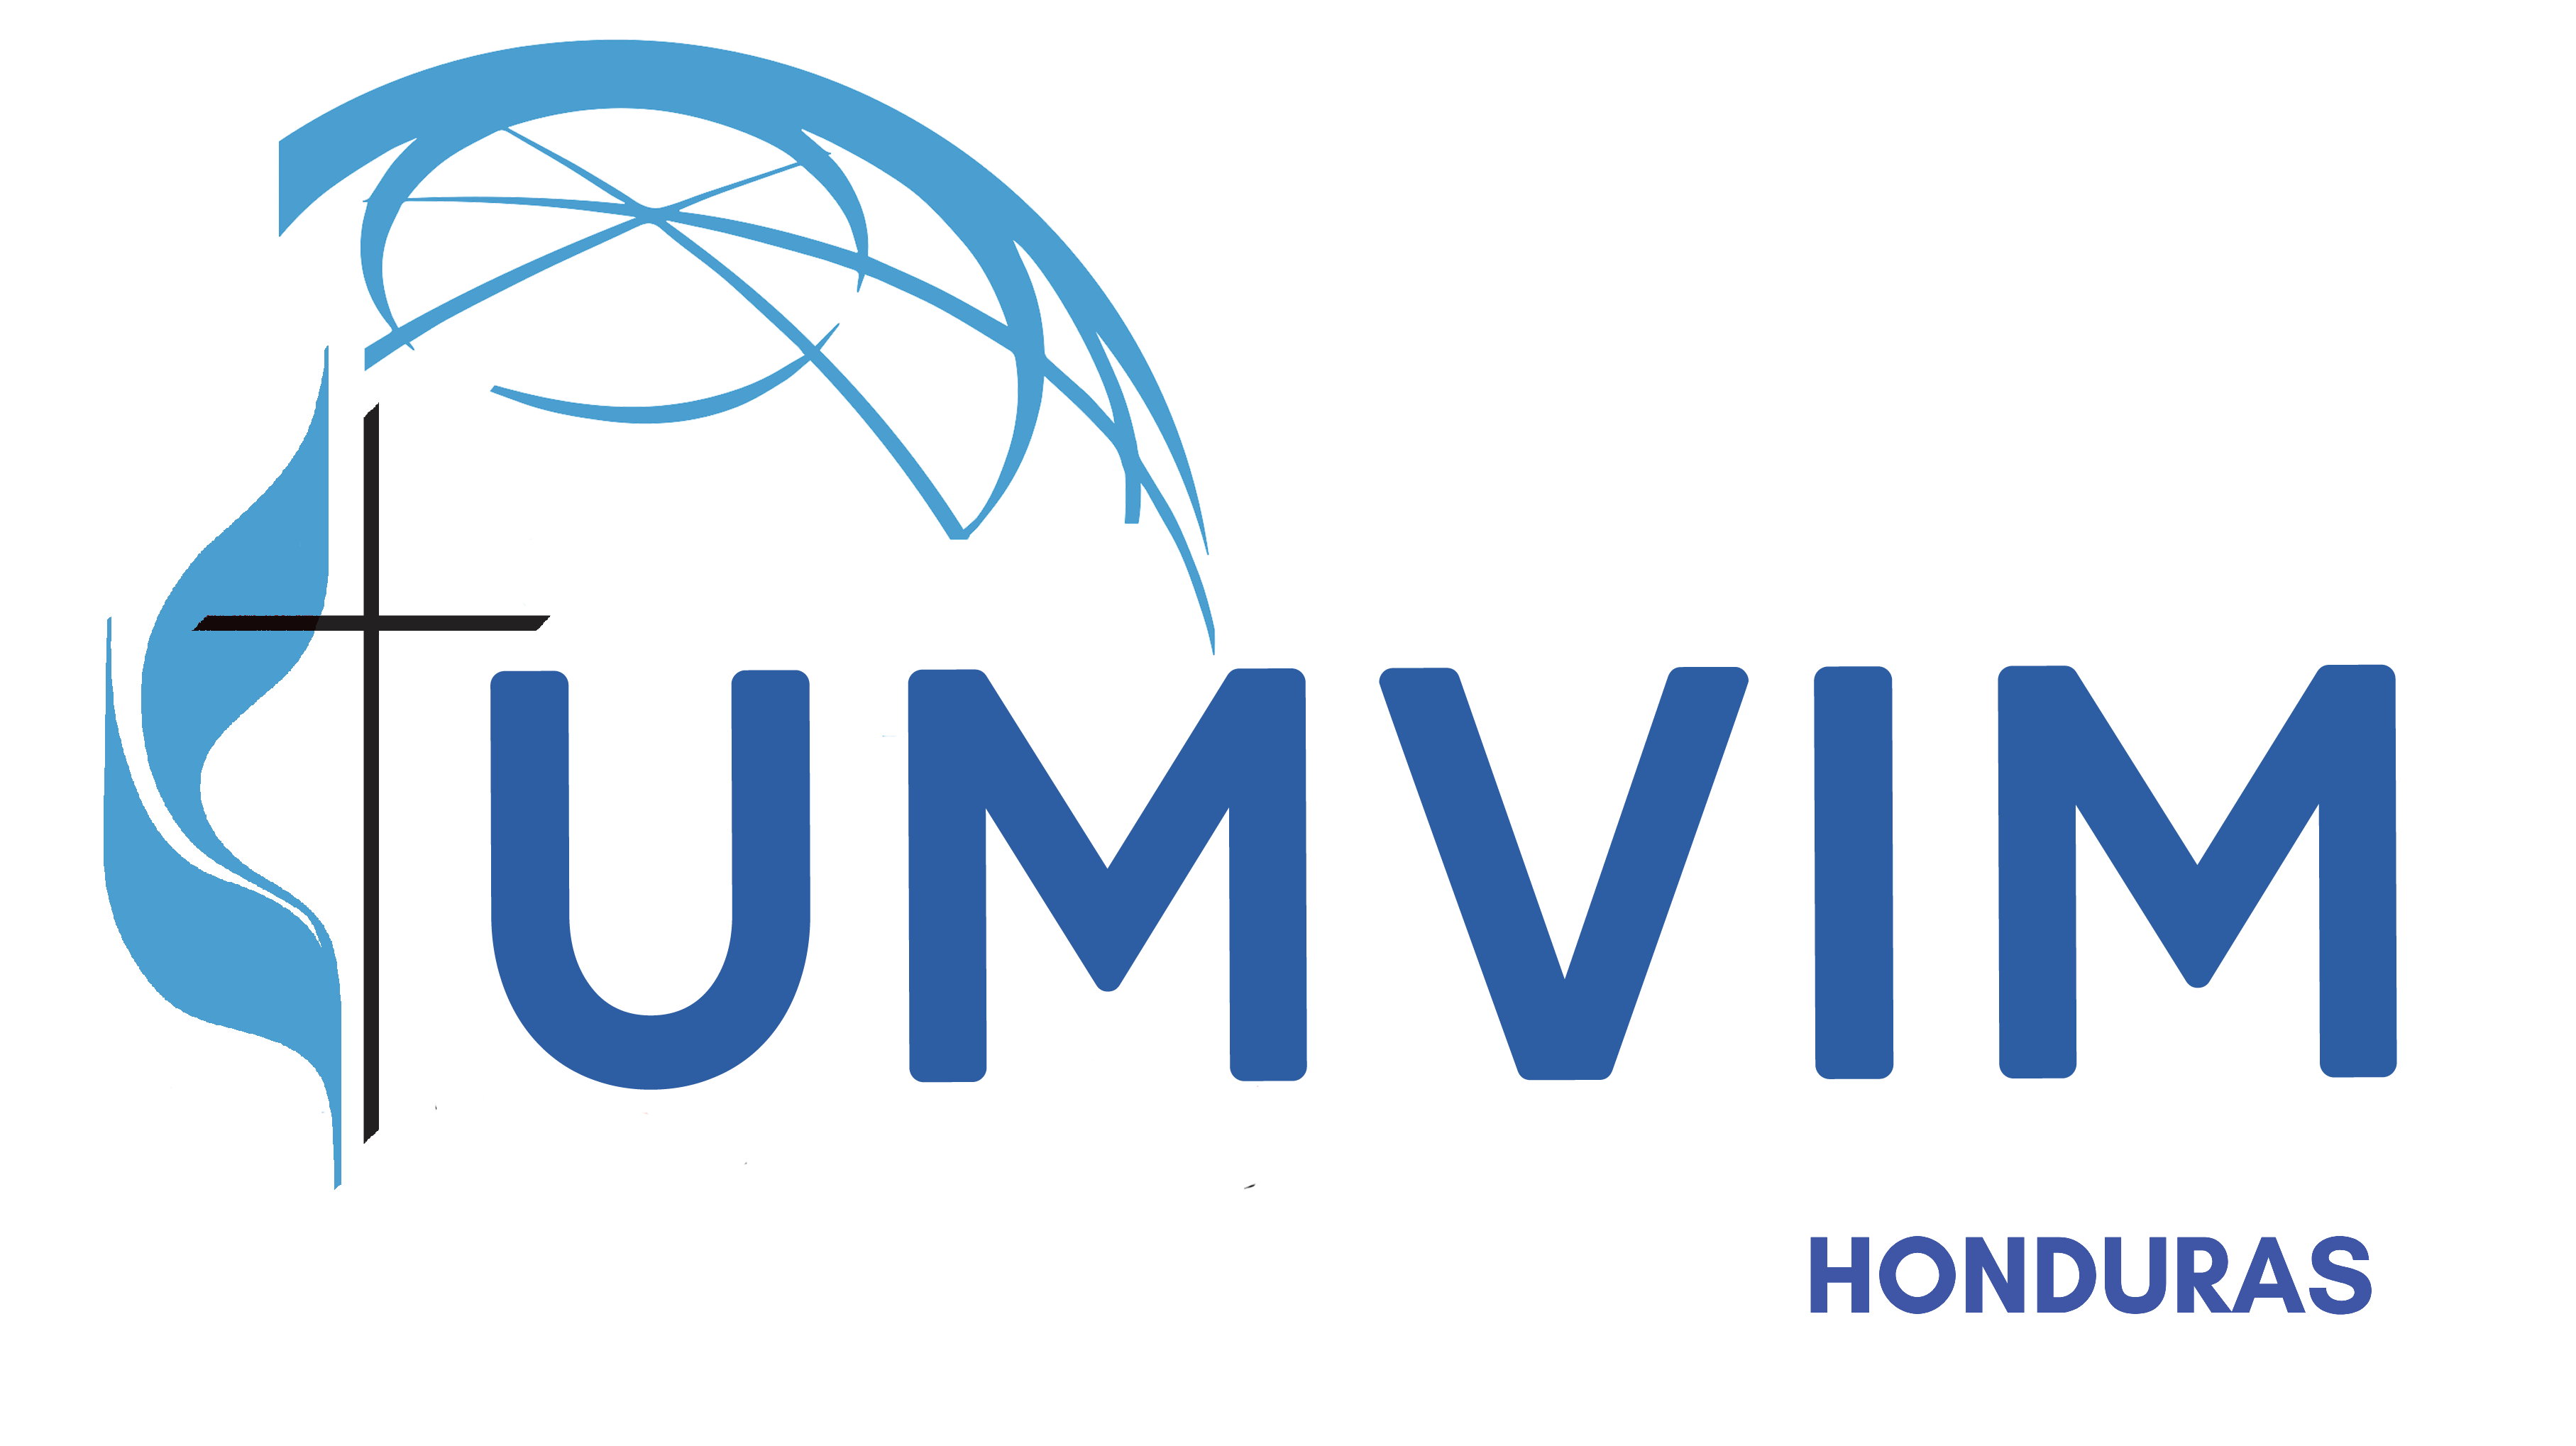 Teams UMVIM Honduras